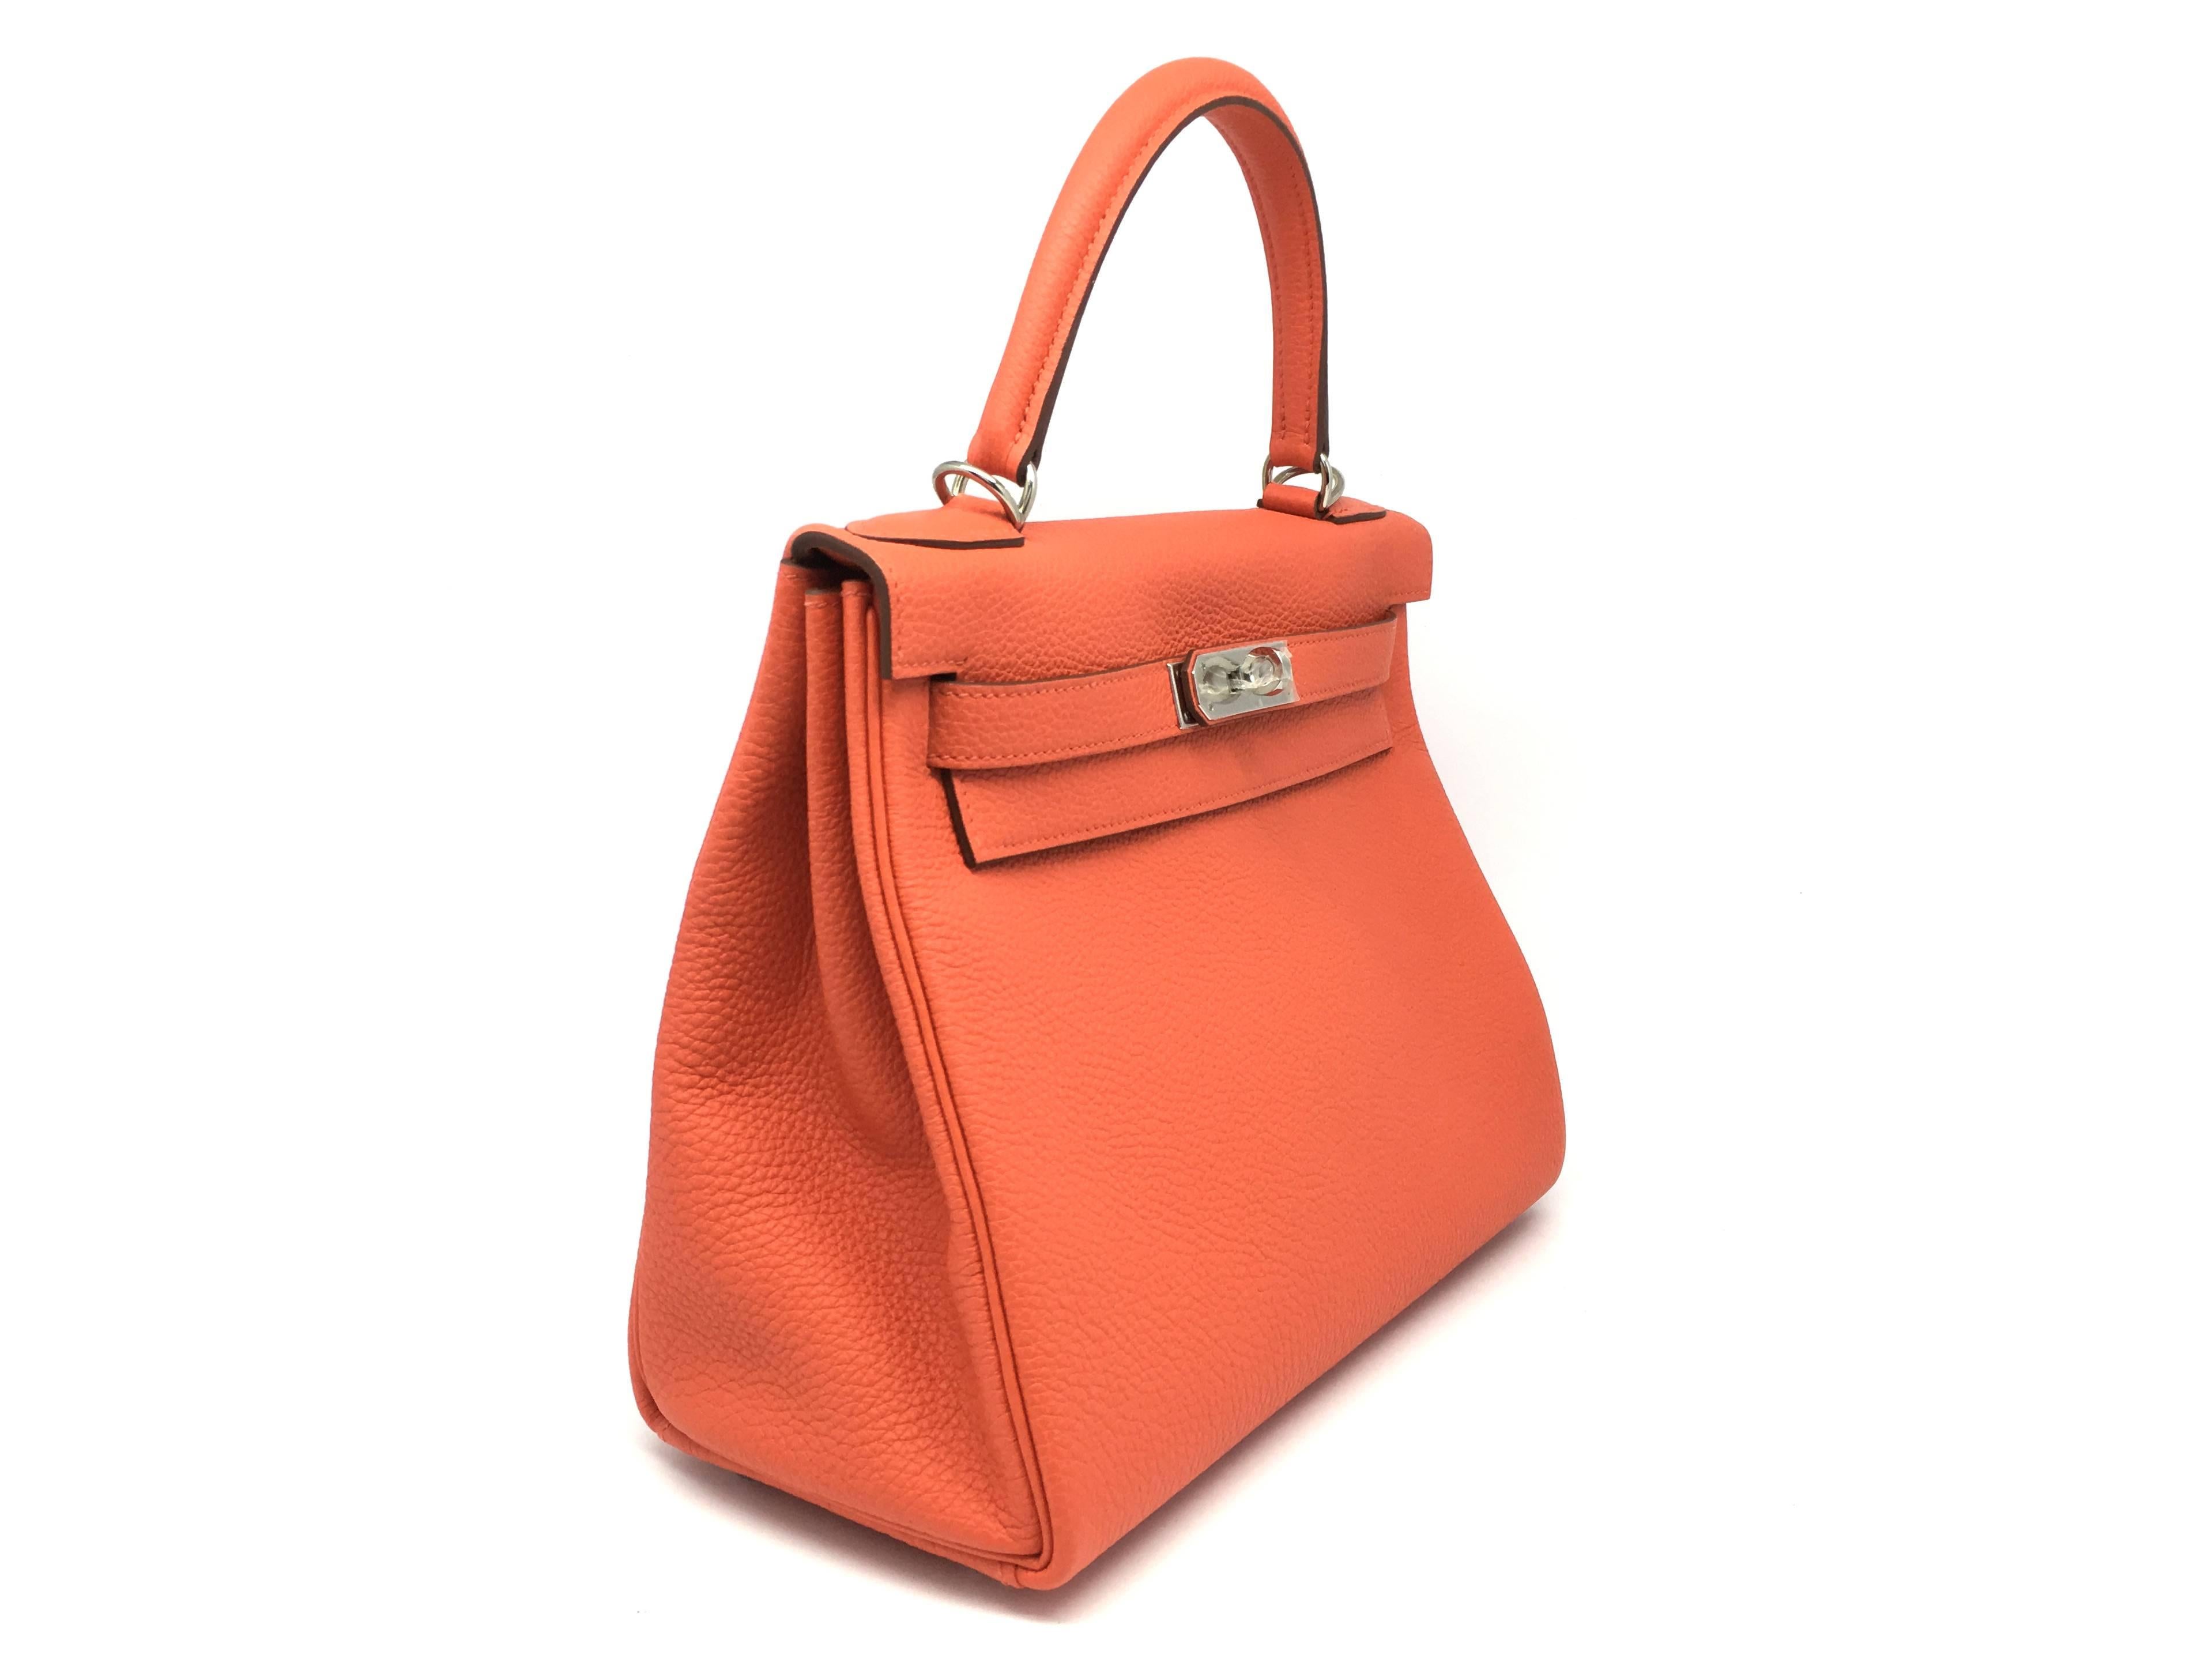 Color: Orange / Capucine (designer color) 

Material: Togo Leather 

Condition: Rank N 
Overall: Brand New. 
Surface: Good
Corners: Good
Edges: Good
Handles/Straps: Good
Hardware: Good

Dimension: W28 × H20.5 × D10cm
Handle:22cm
Shoulder